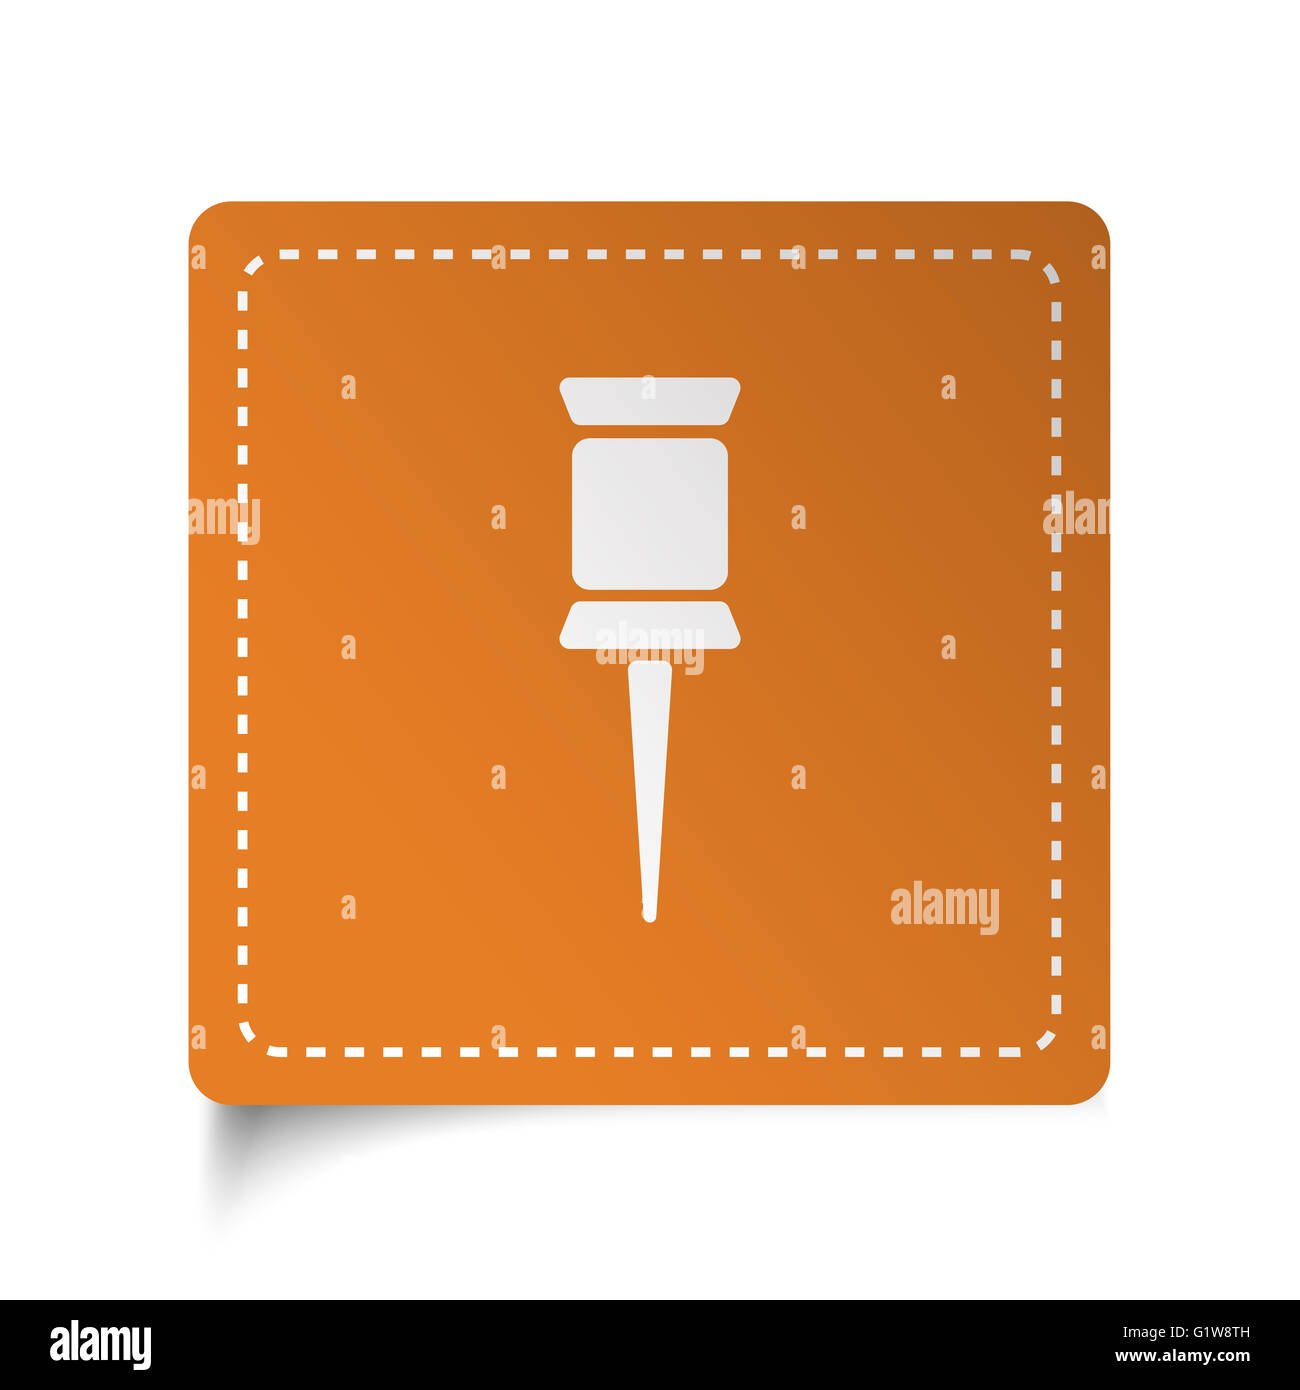 White flat Pushpin icon on orange sticker Stock Photo